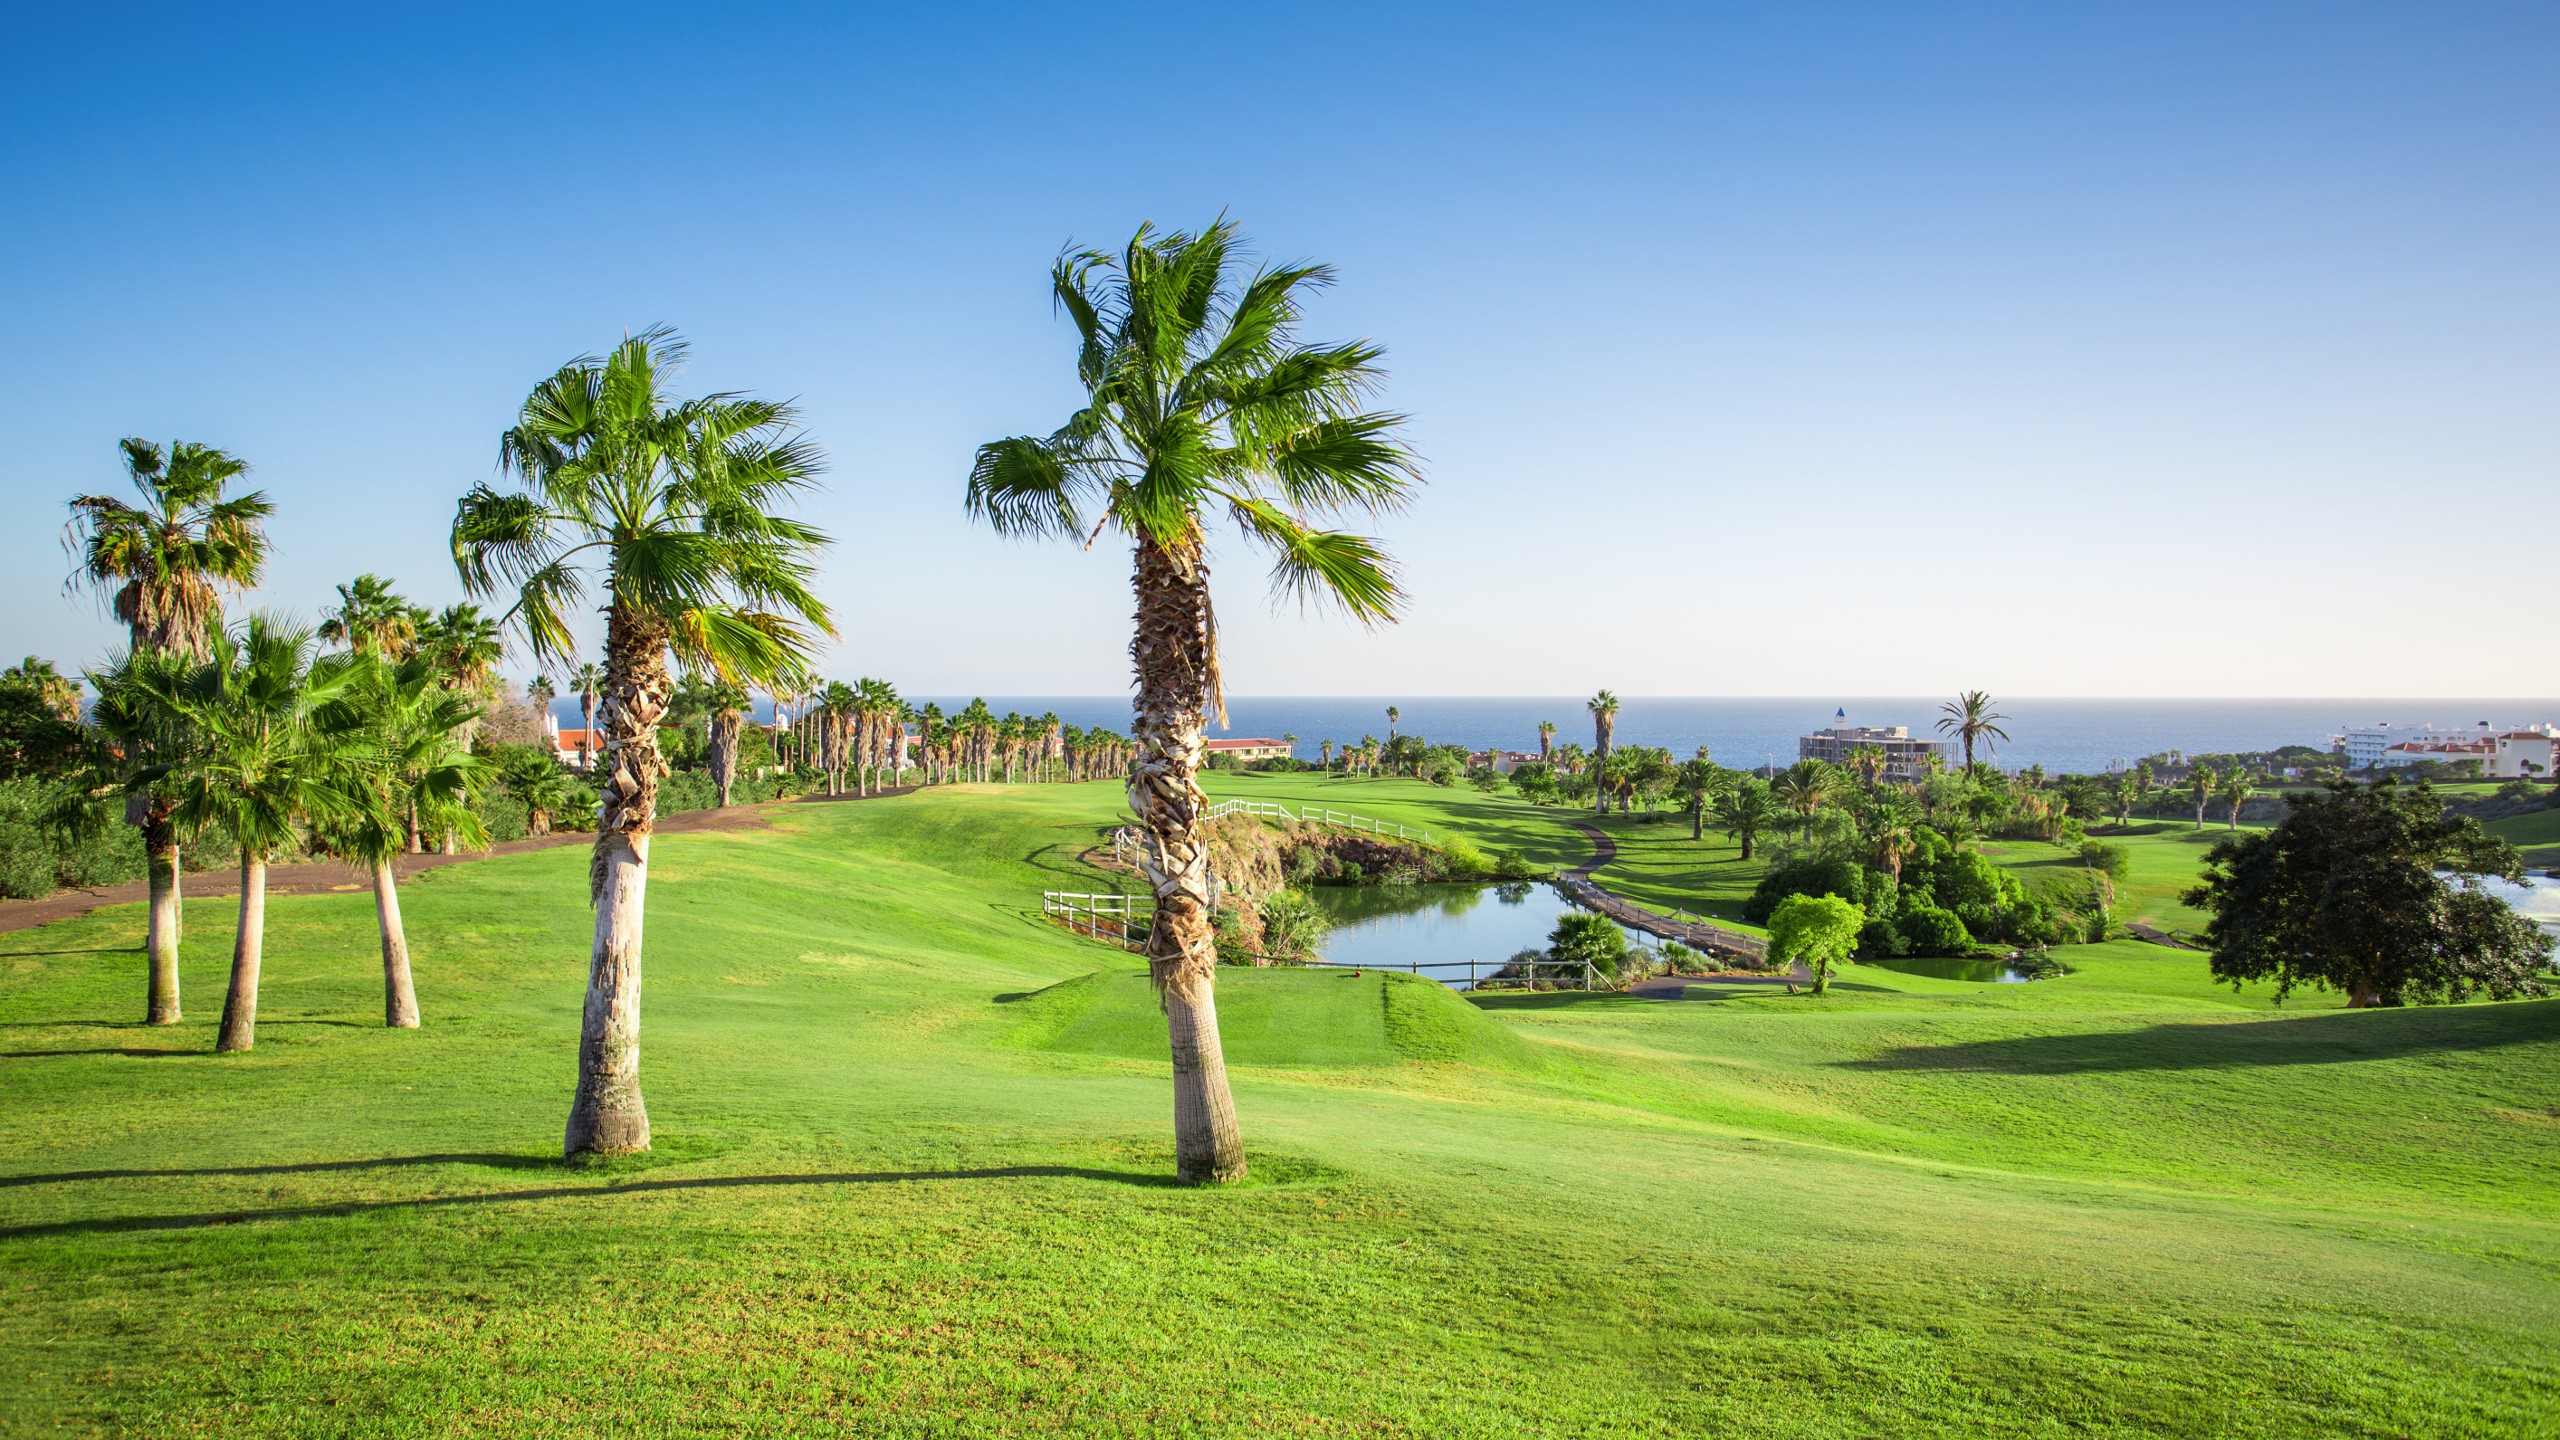 Hej hej der ovre Bi Golf del Sur - Golf in Tenerife | Just Tee Times